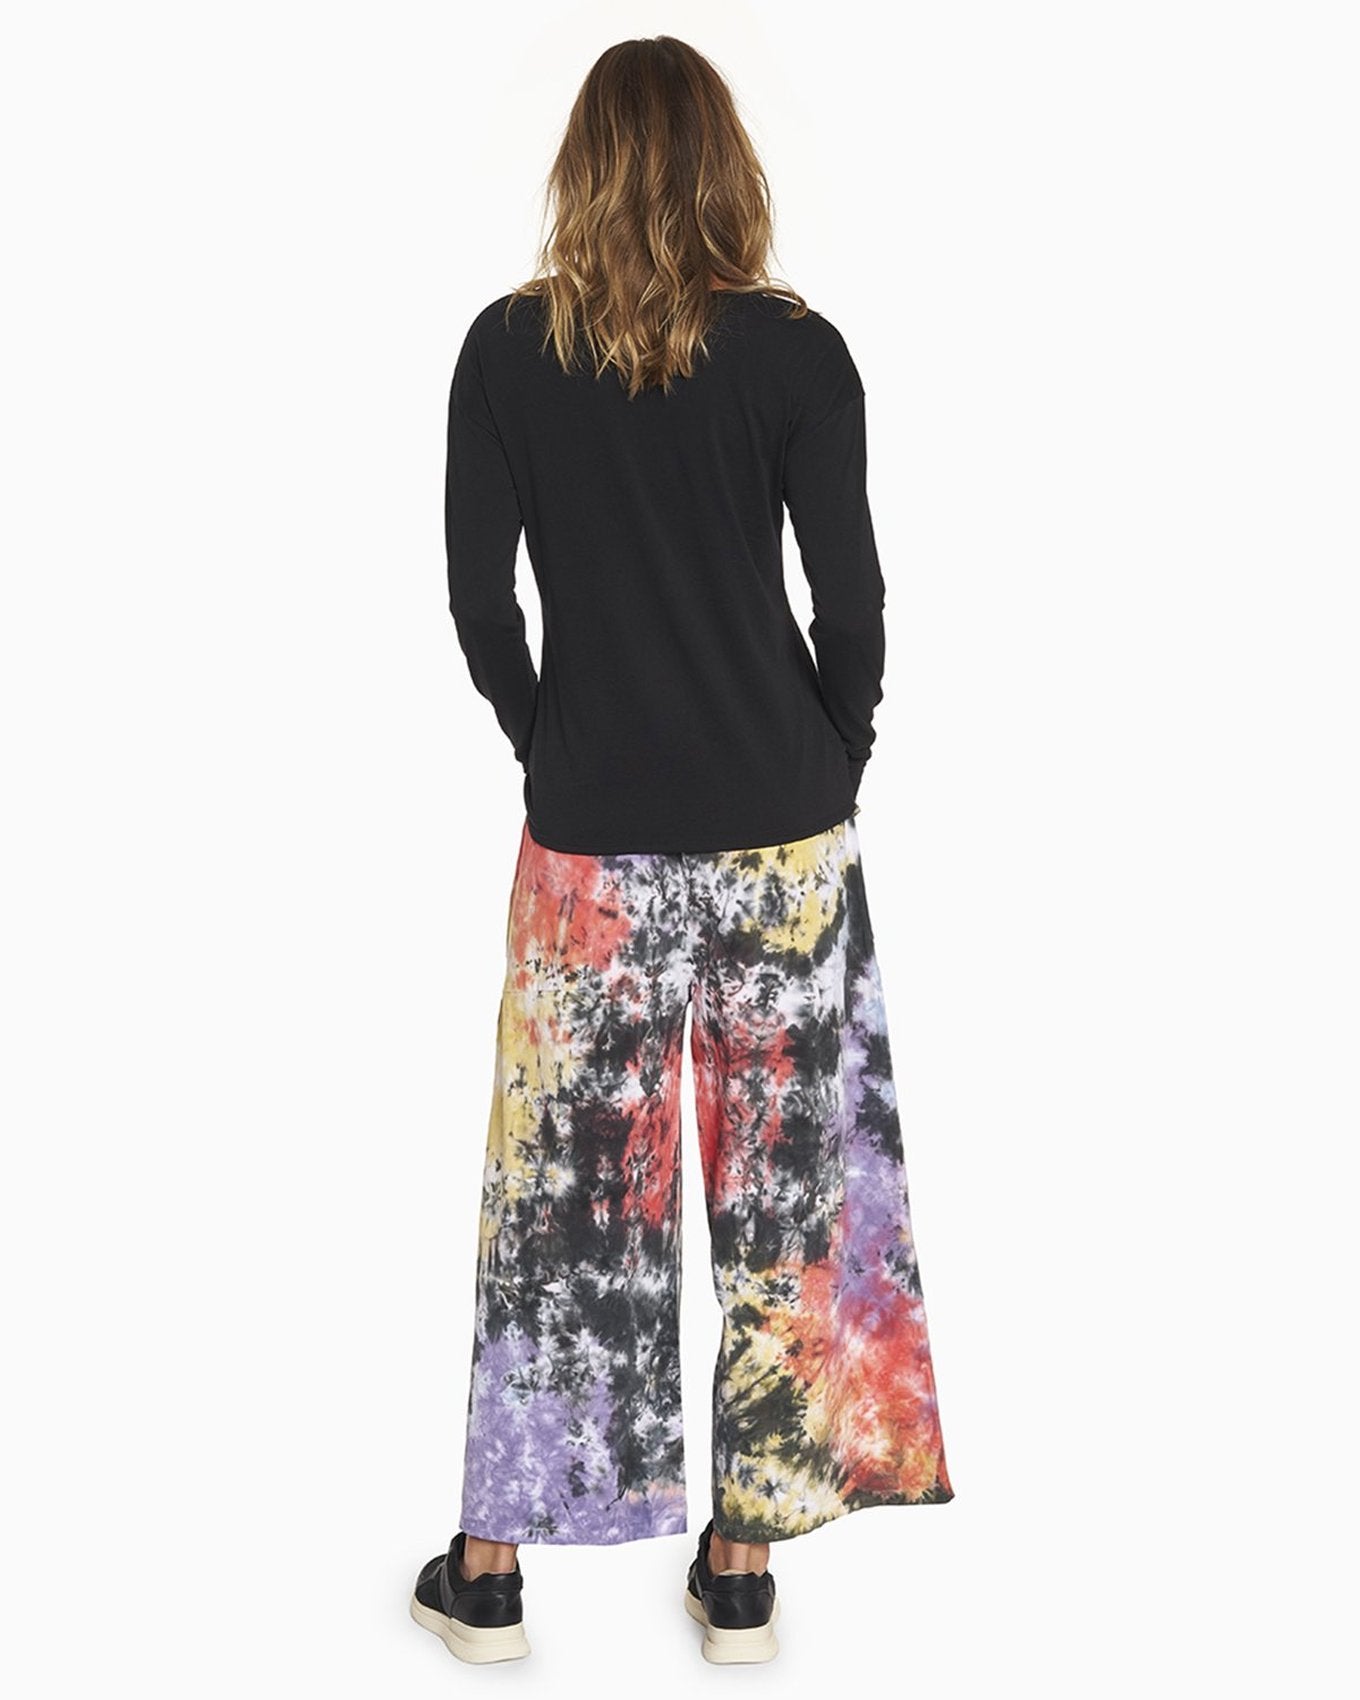 YesAnd Organic Tie Dye Wide Leg Cropped Pants Pants in color Splatter Tie Dye C02 and shape pants